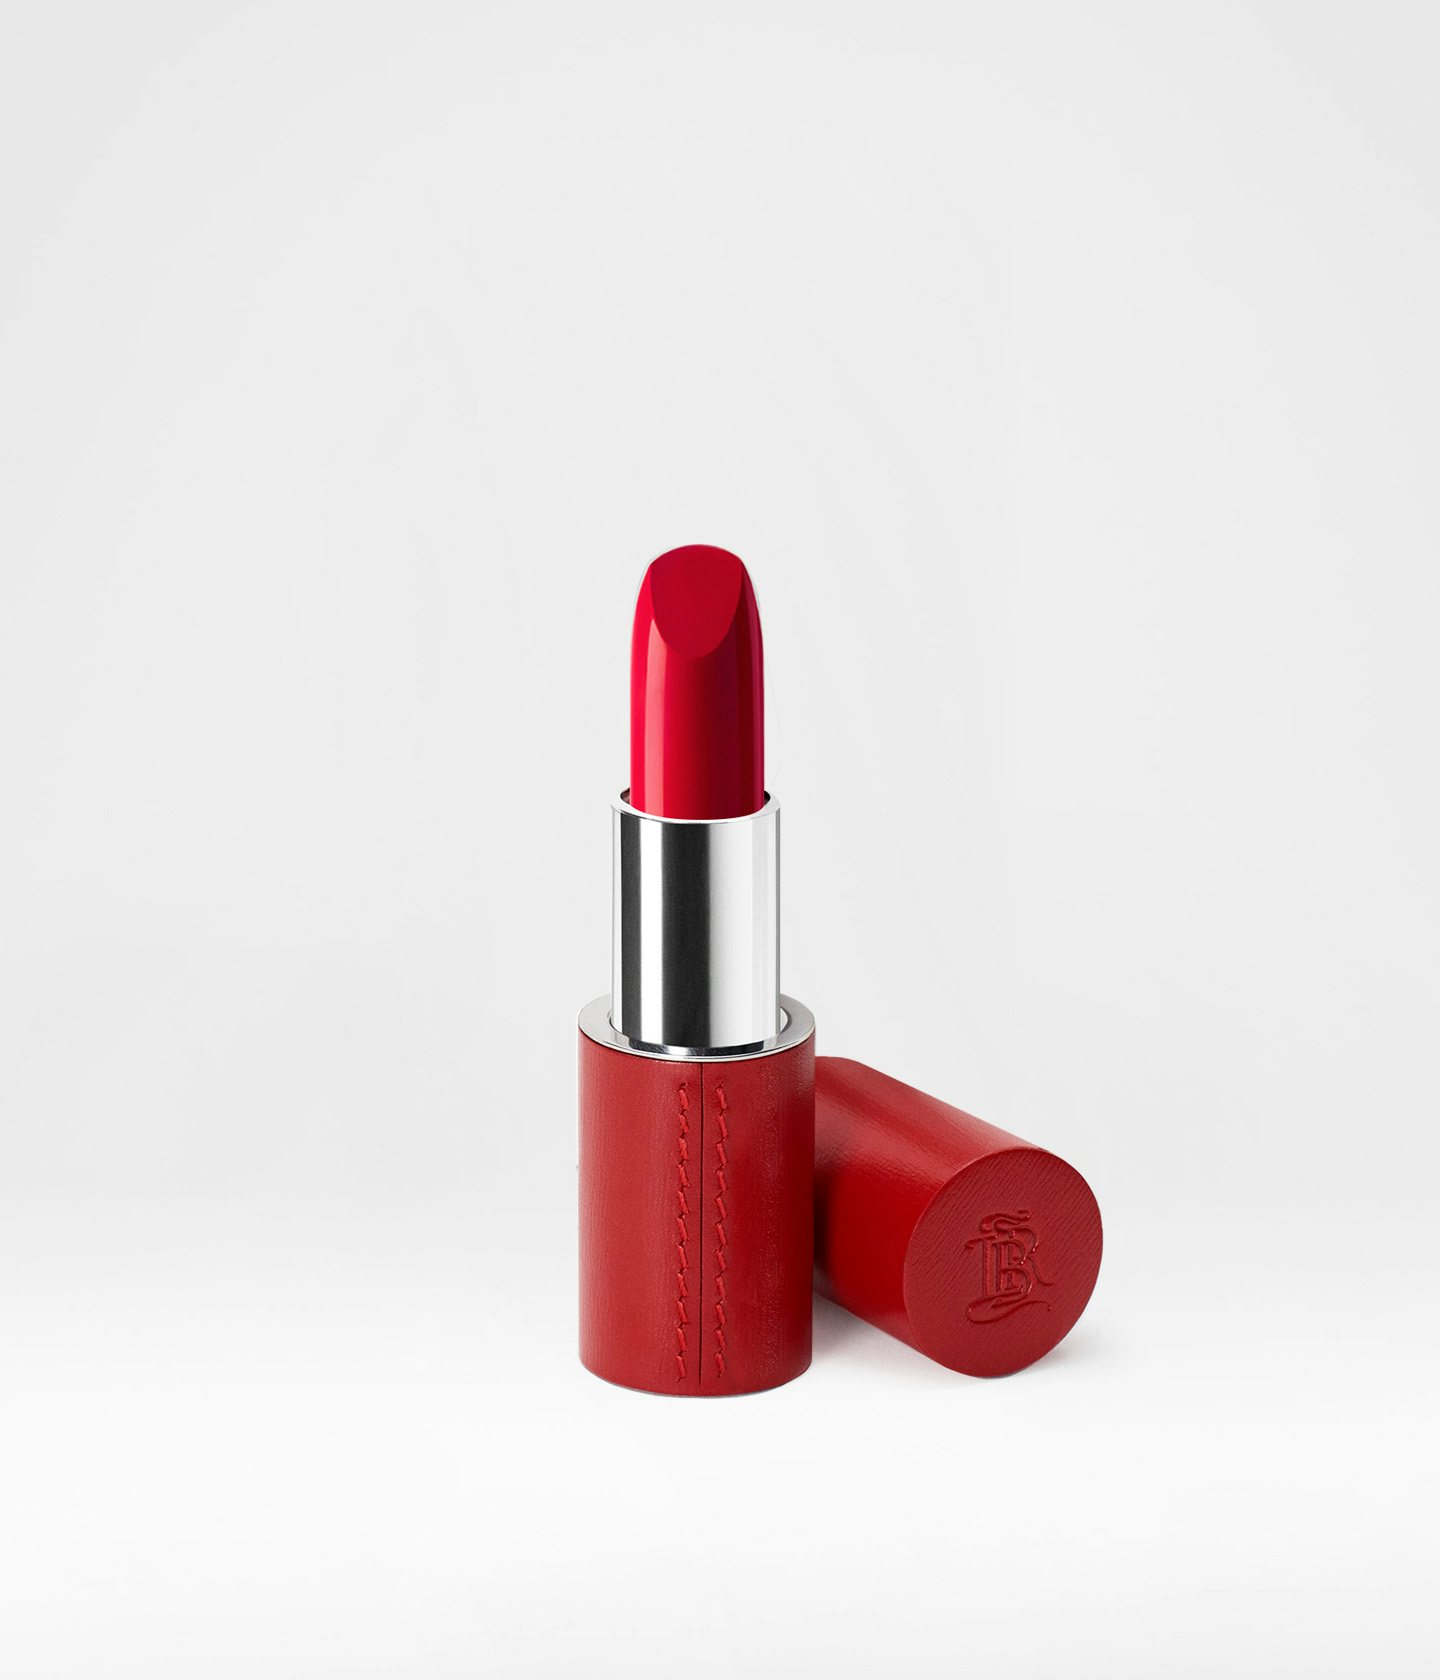 La bouche rouge iconic 21 satin lipstick